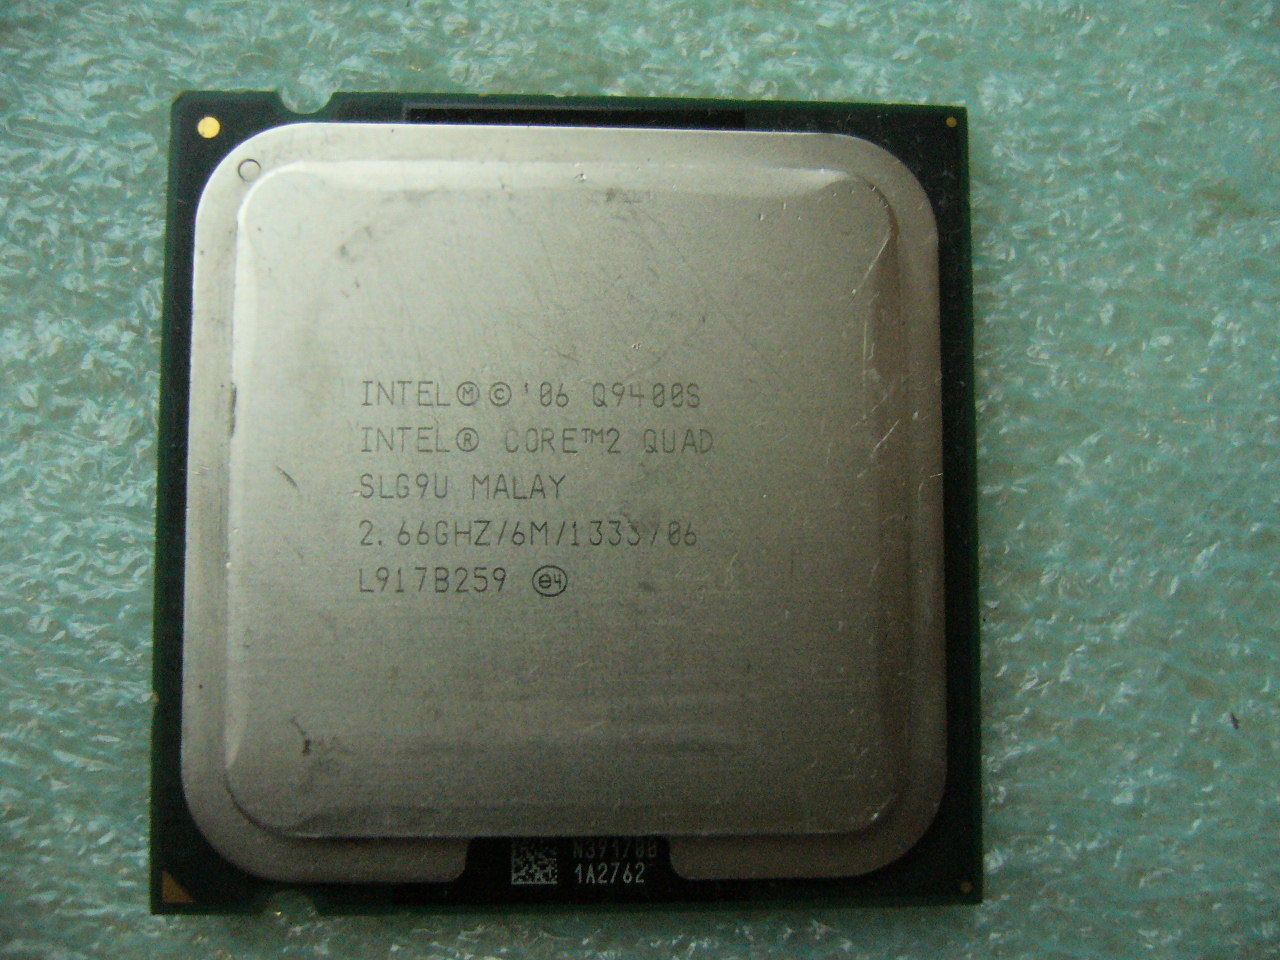 QTY 1x INTEL Quad Cores Q9400S CPU 2.66GHz/6MB/1333Mhz TDP 65W LGA775 SLG9U